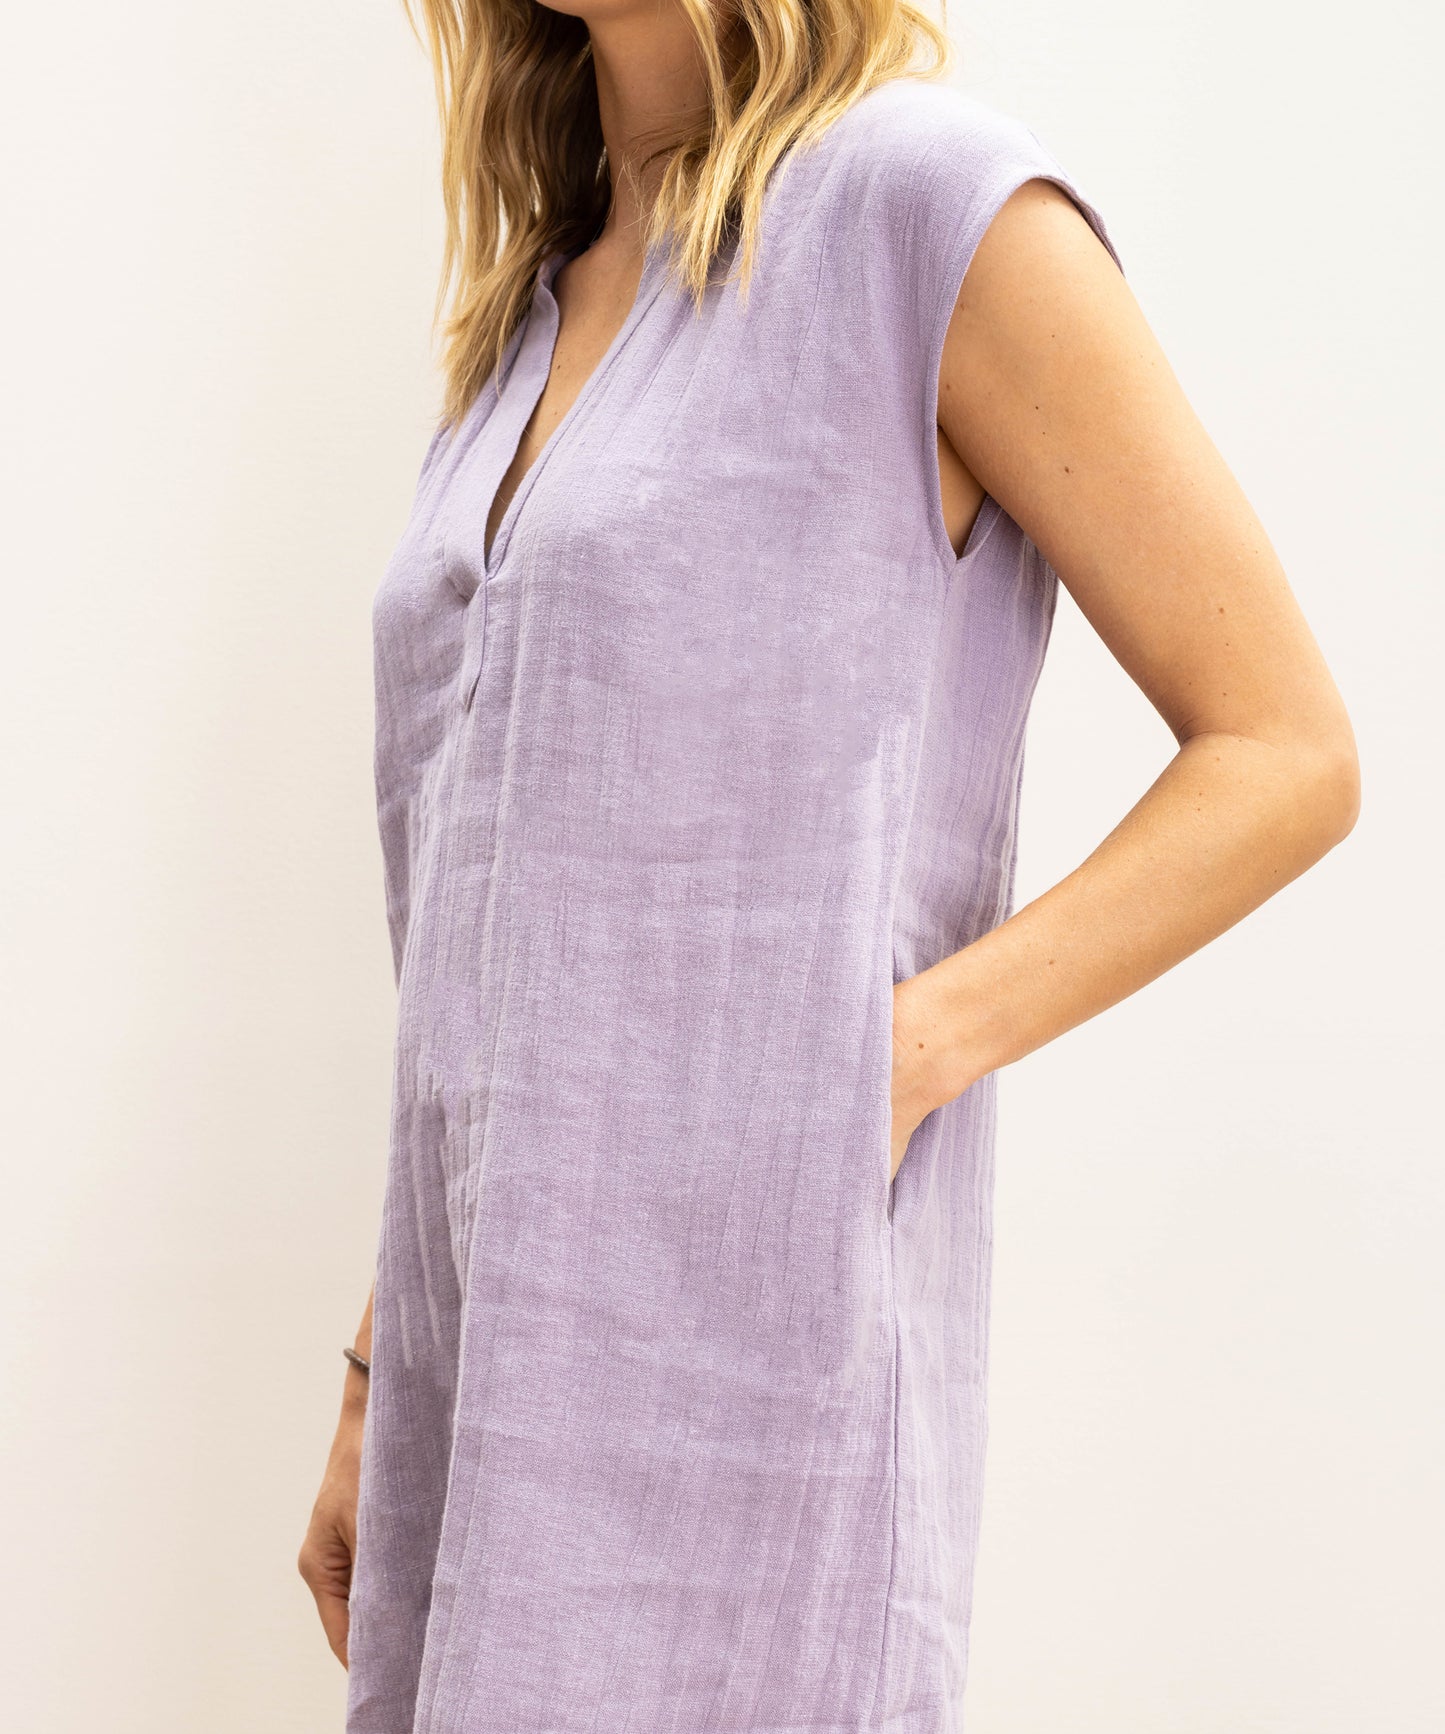 Meridian Isla Dress in color Lavender Mist on a model